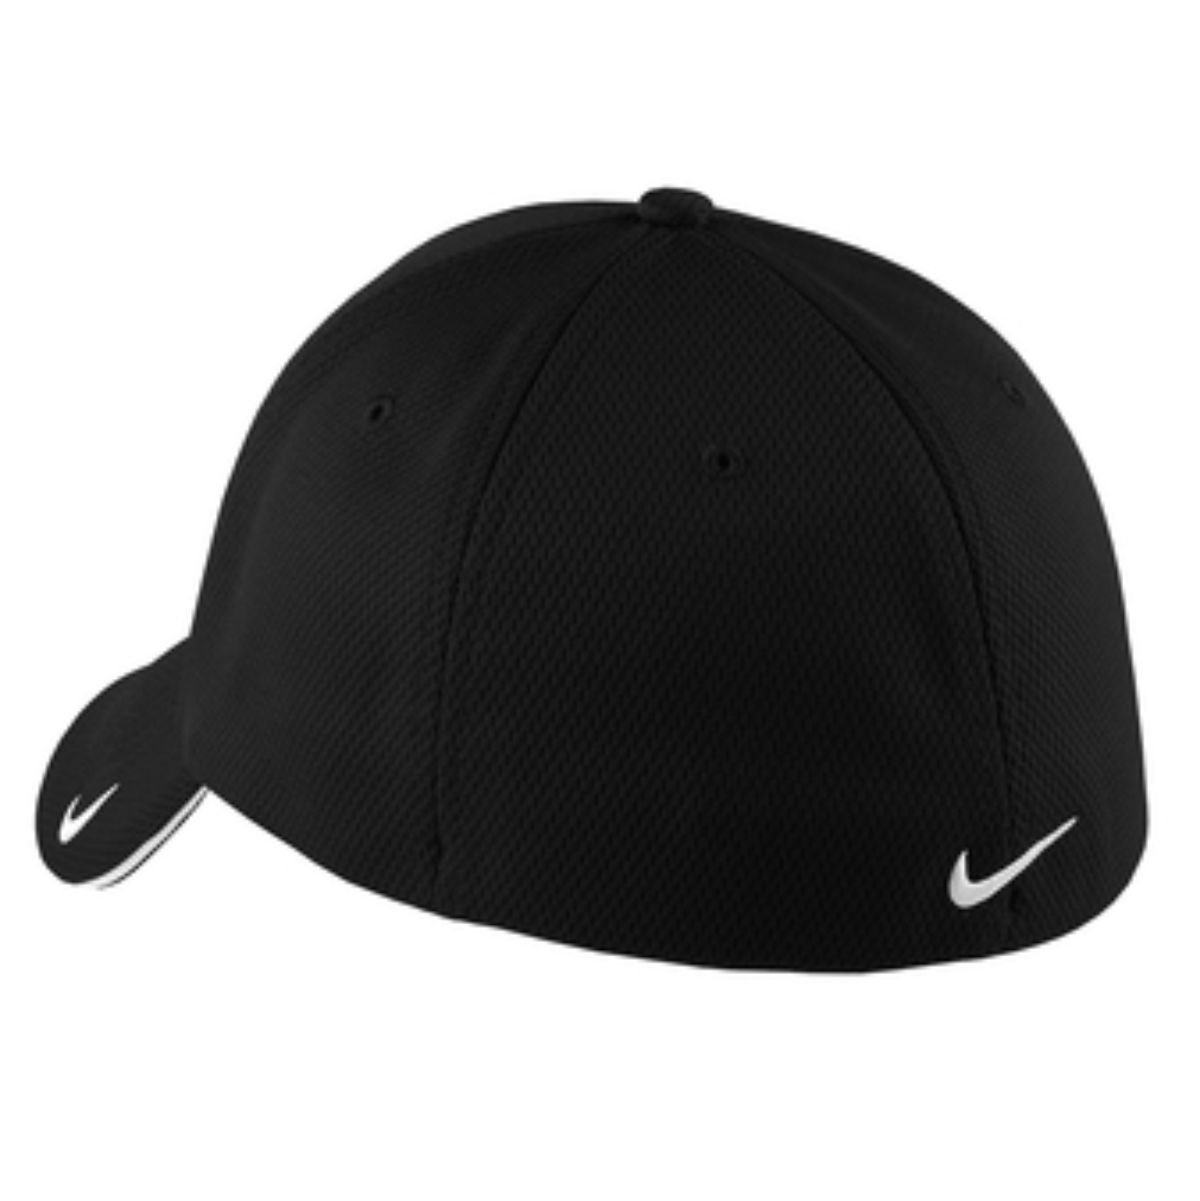 Huntley Havoc Softball Nike Flex Cap | HyperStitch, Inc